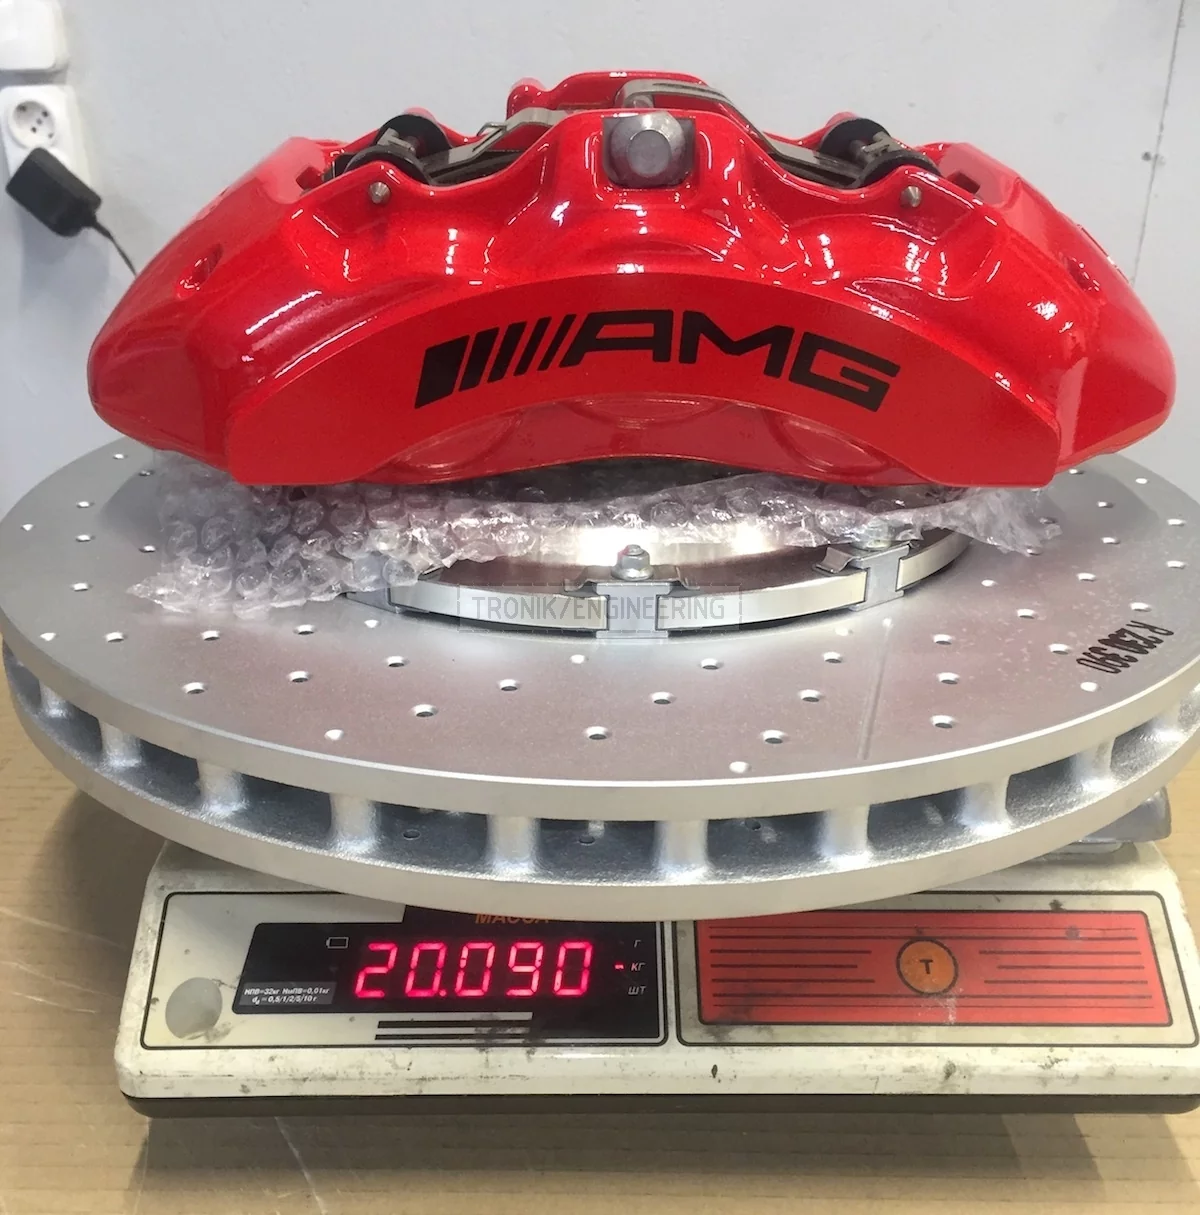 assembled brake system set weight is 20 kg